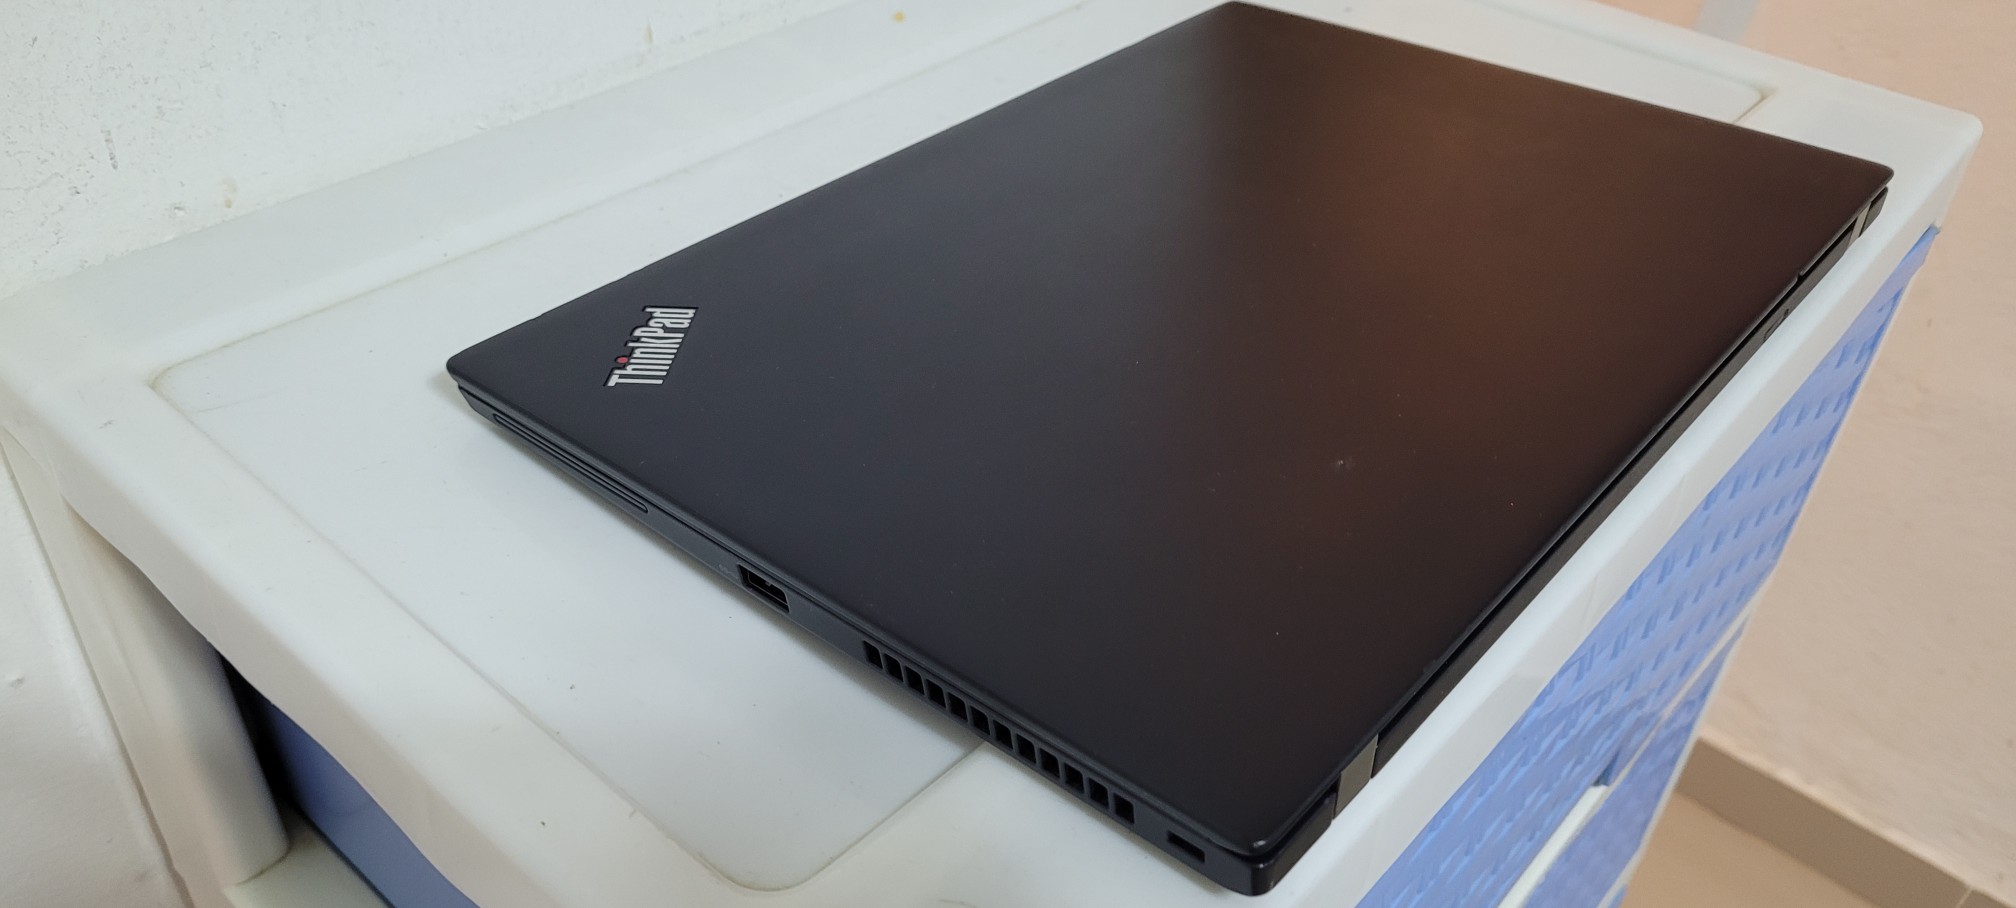 computadoras y laptops - Lenovo Slim t480 14 Pulg Core i5 8va Gen Ram 8gb ddr4 Disco 256gb SSD WIFI 2